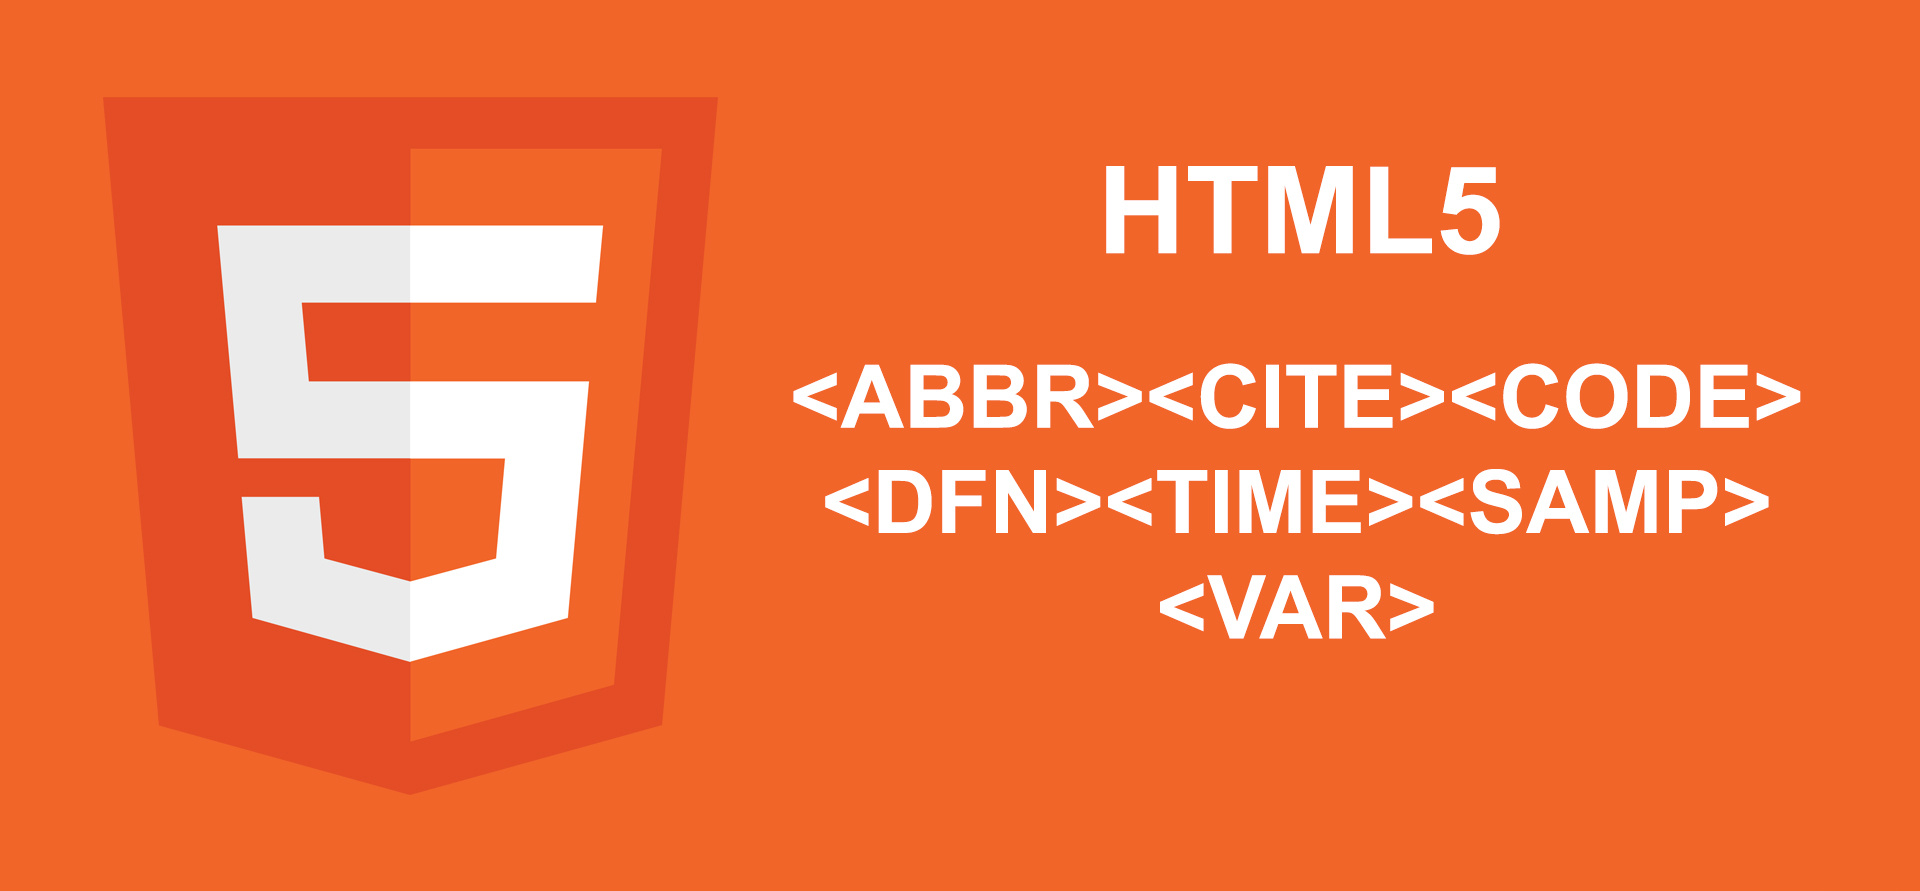 Tutorial HTML5 - Elemen <abbr>, <cite>, <code>, <dfn>, <time>, <samp>, <var> image